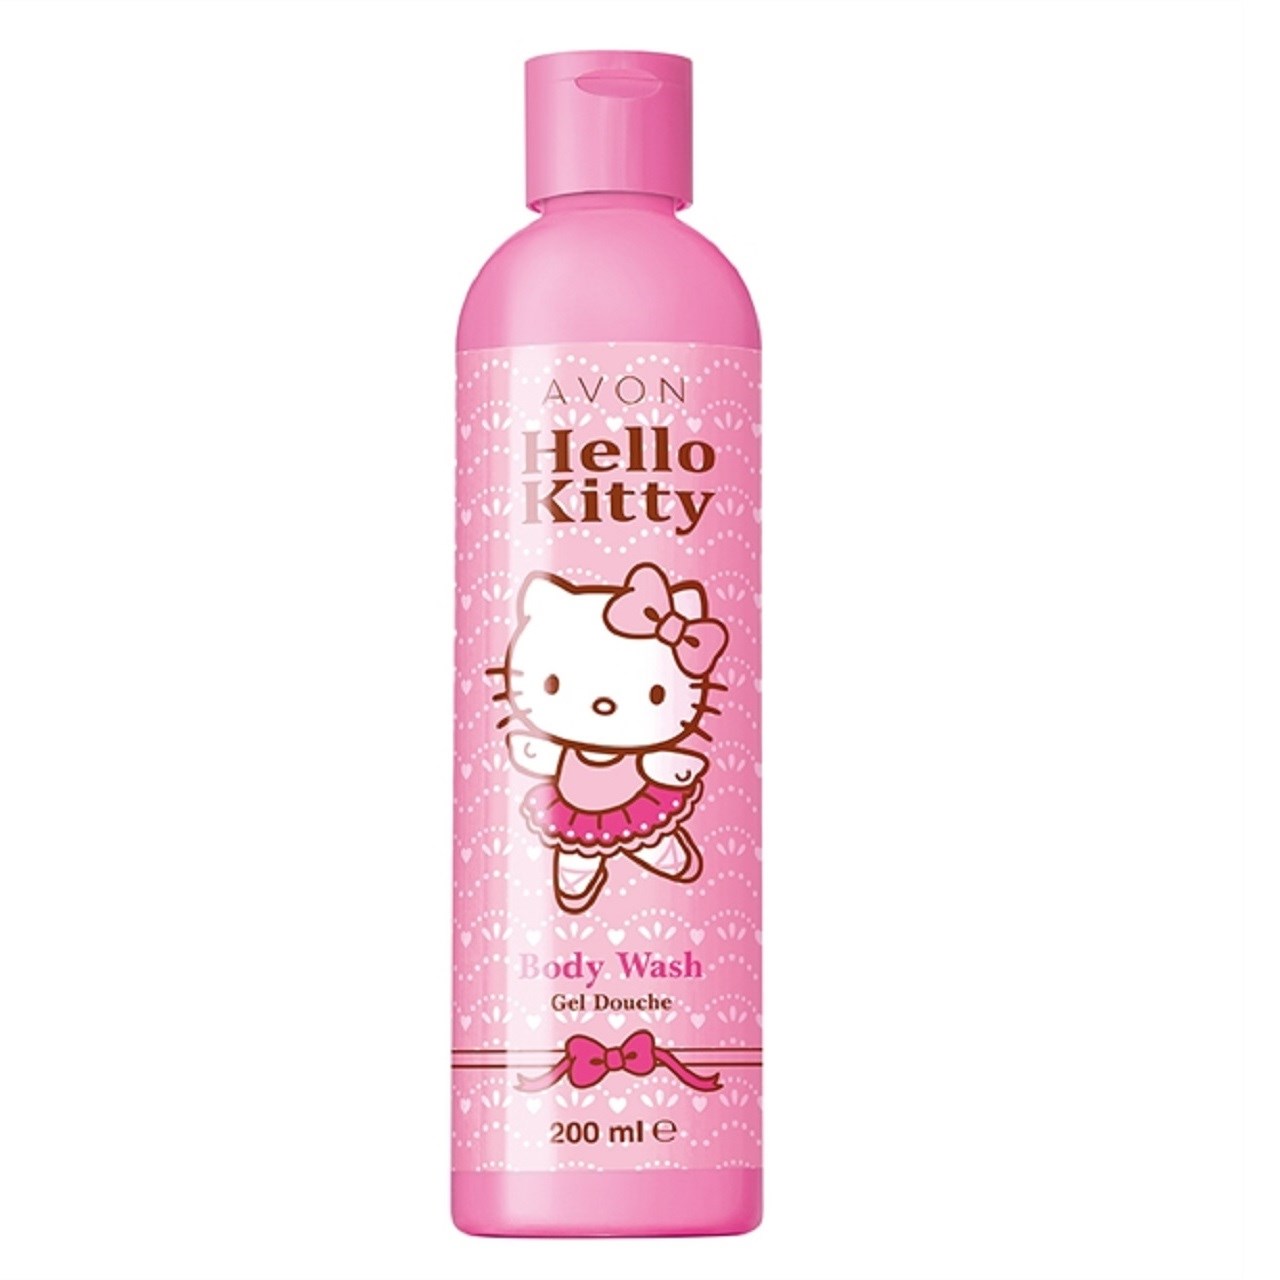 شامپو بدن کودک آون مدل Hello Kitty Body Wash حجم 200 میلی لیتر